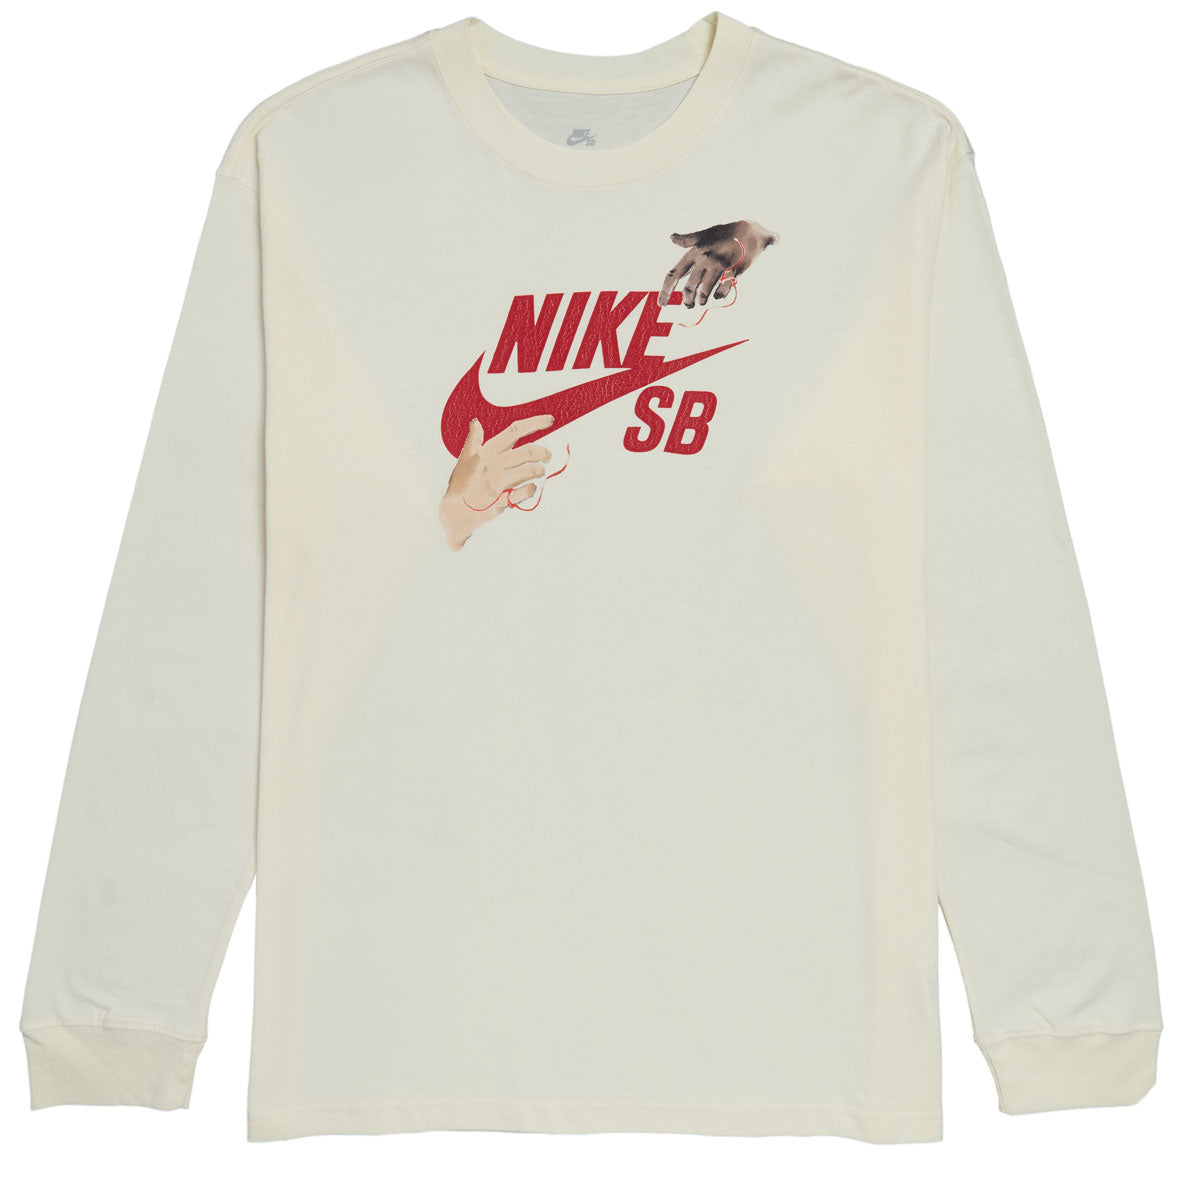 Nike SB The Reach Long Sleeve T-Shirt - Coconut Milk image 1